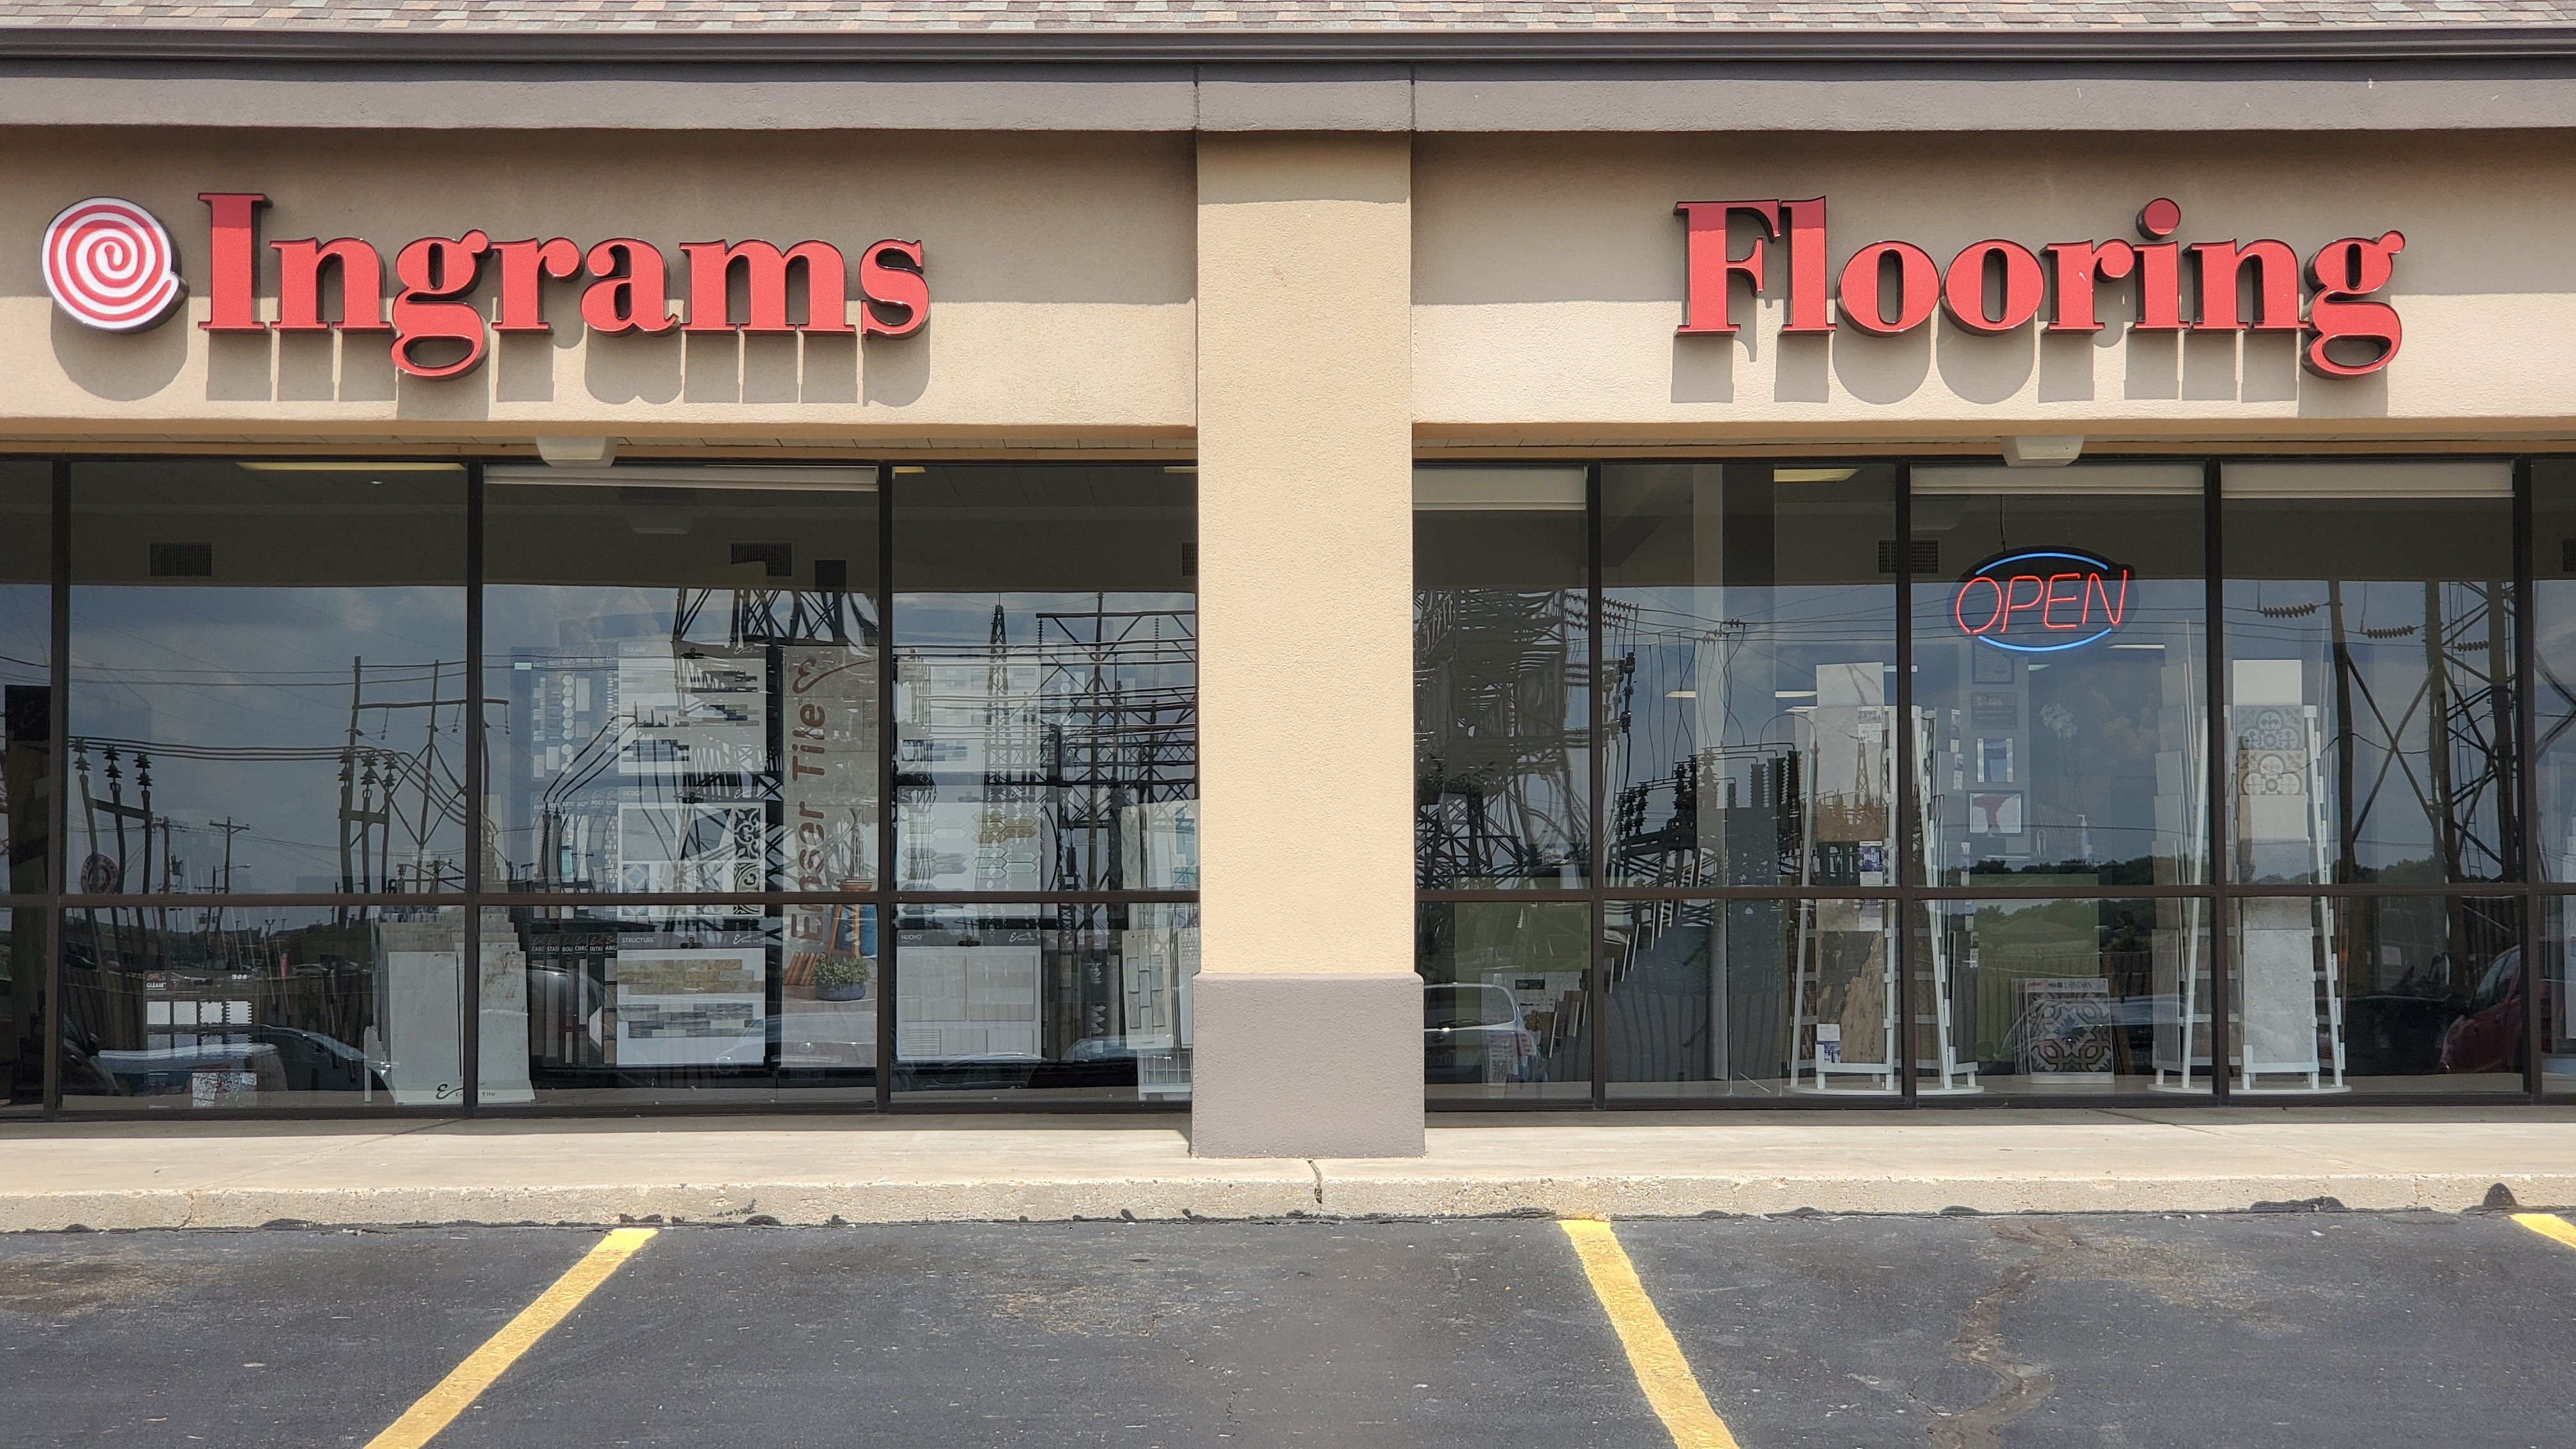 About Ingrams Flooring in Amarillo